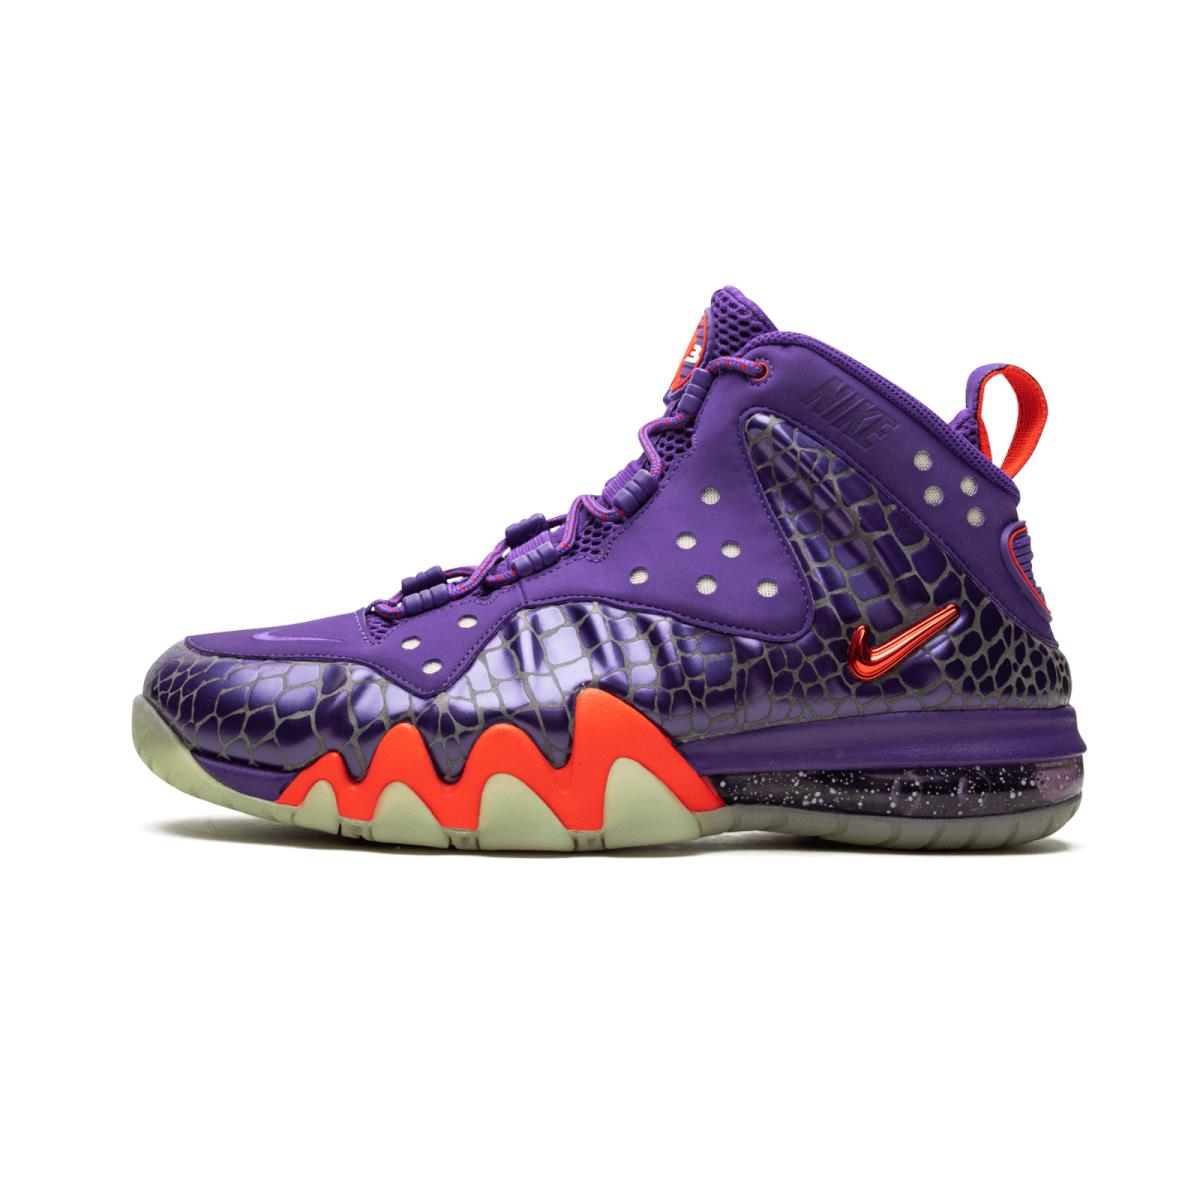 Nike Air Barkley Posite Max Size 9. Suns Purple Orange CB 34. 555097-581